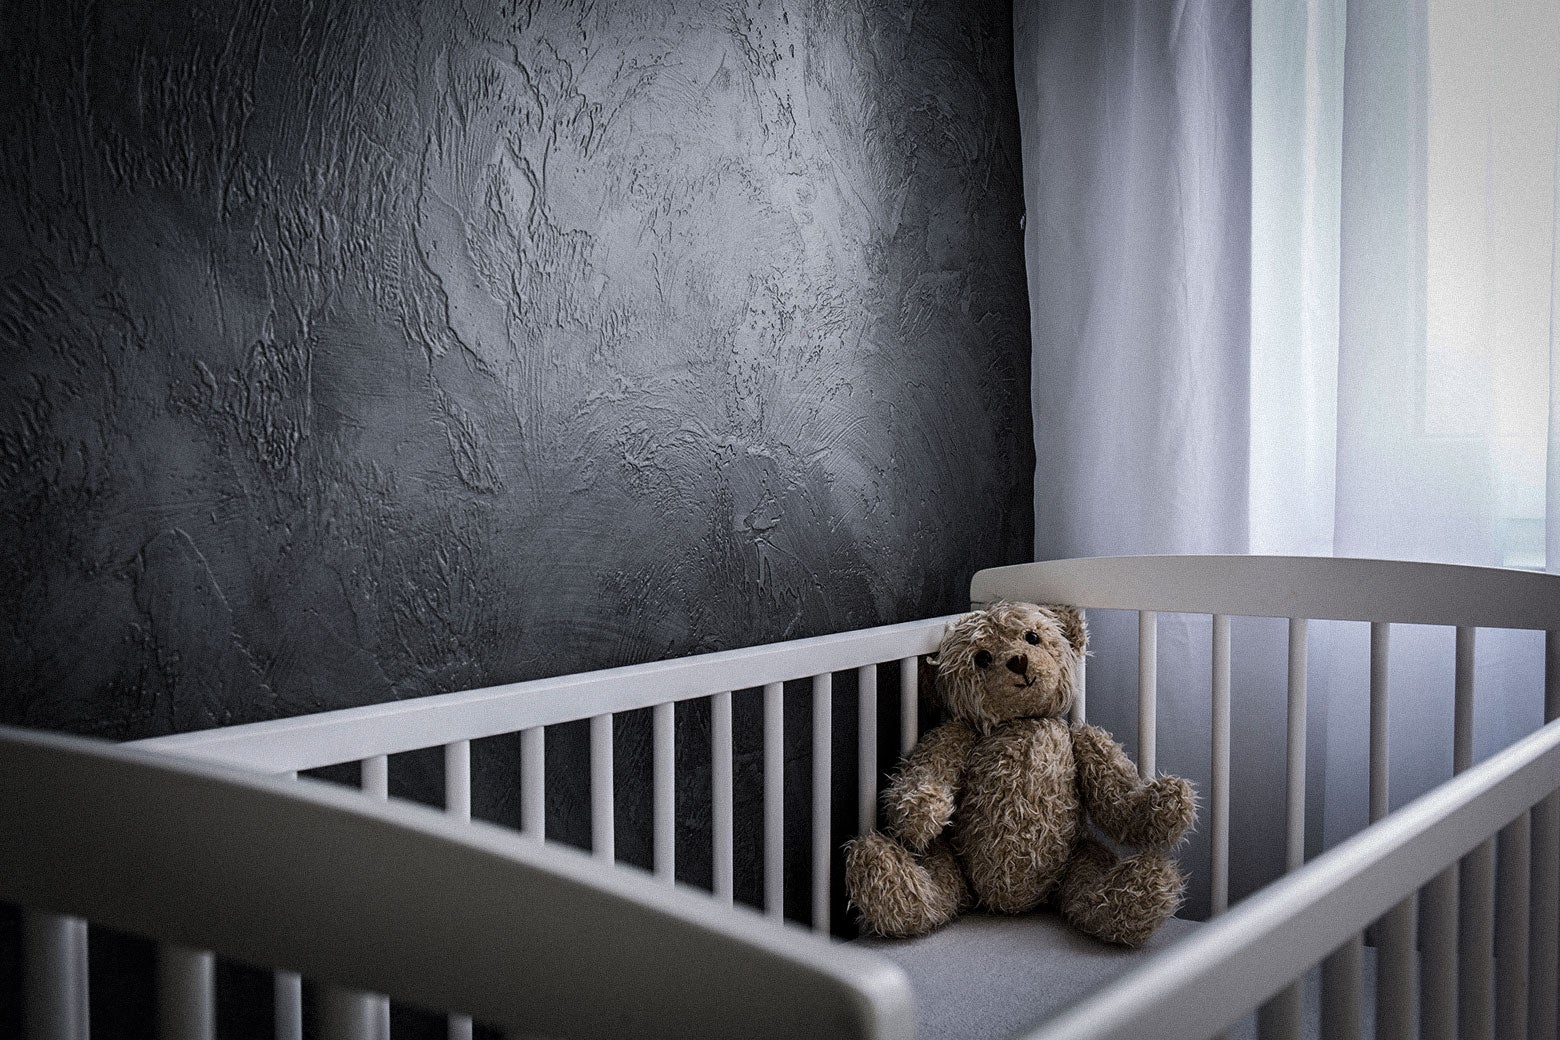 An empty crib, with a teddy bear inside it.